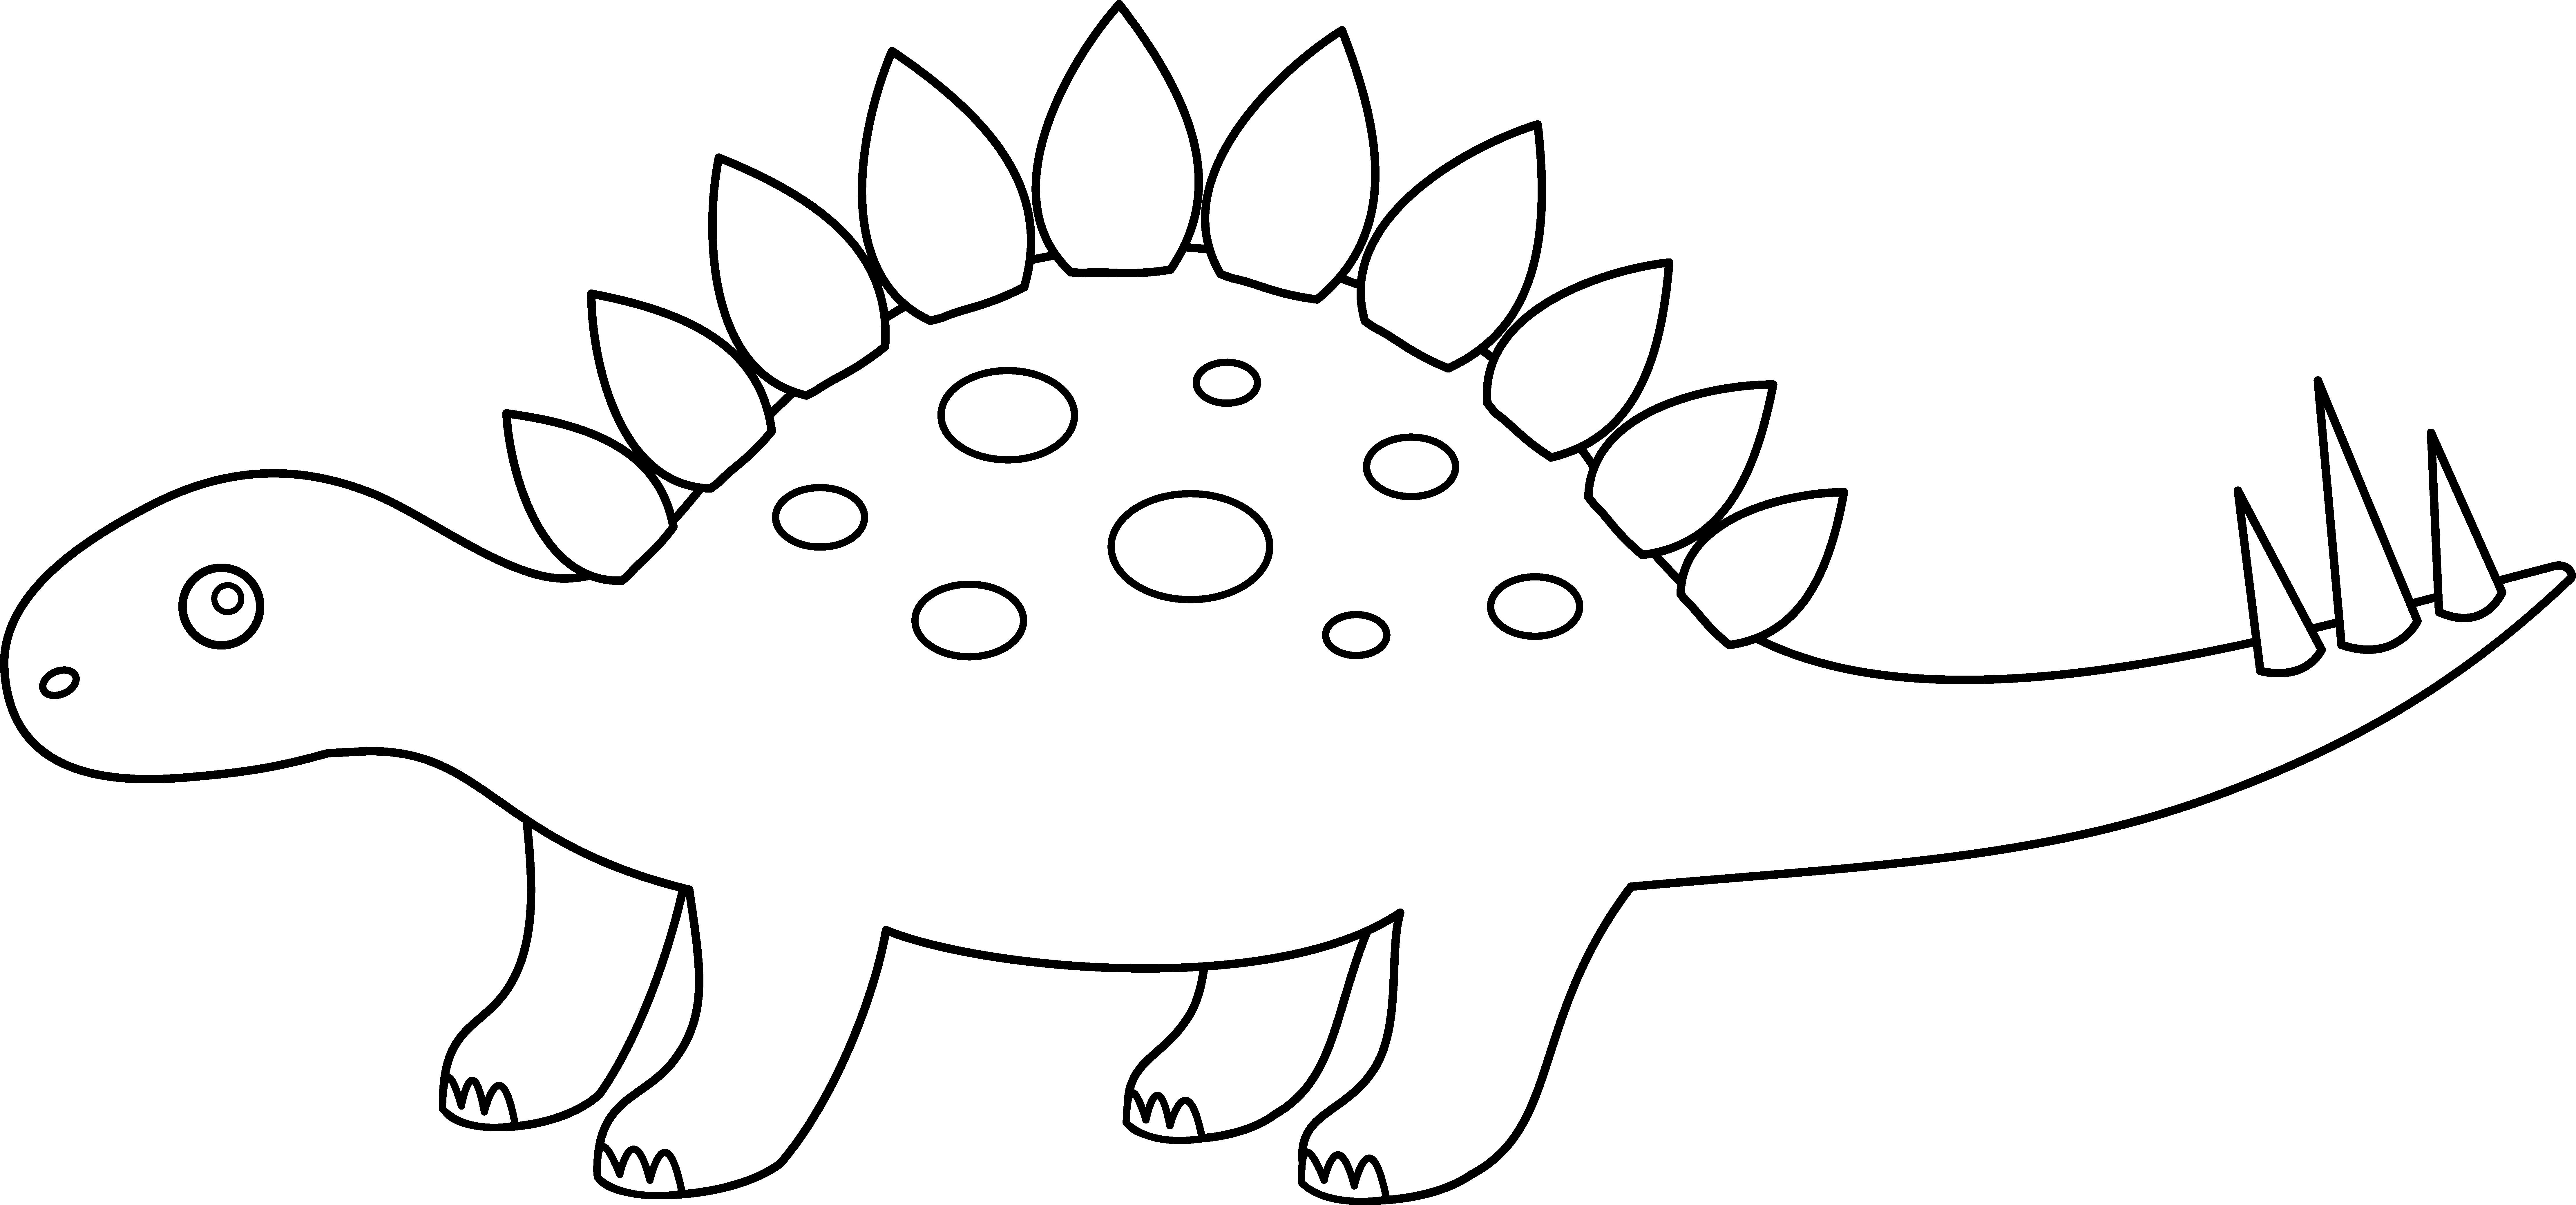 Stegosaurus Coloring Page Free Clip Art Cliparts.co